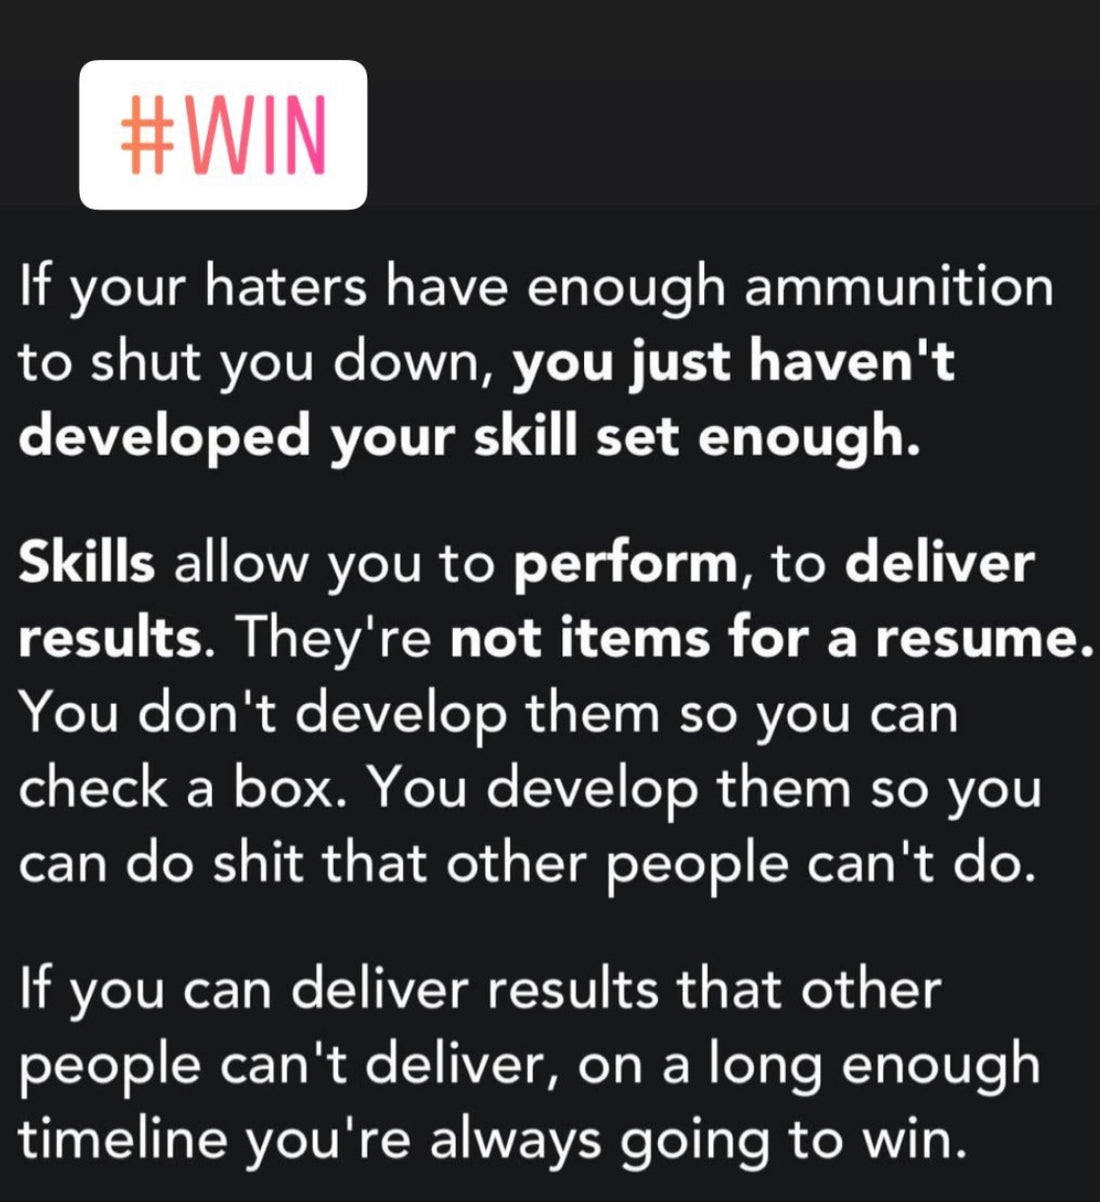 Developing Skills to Win